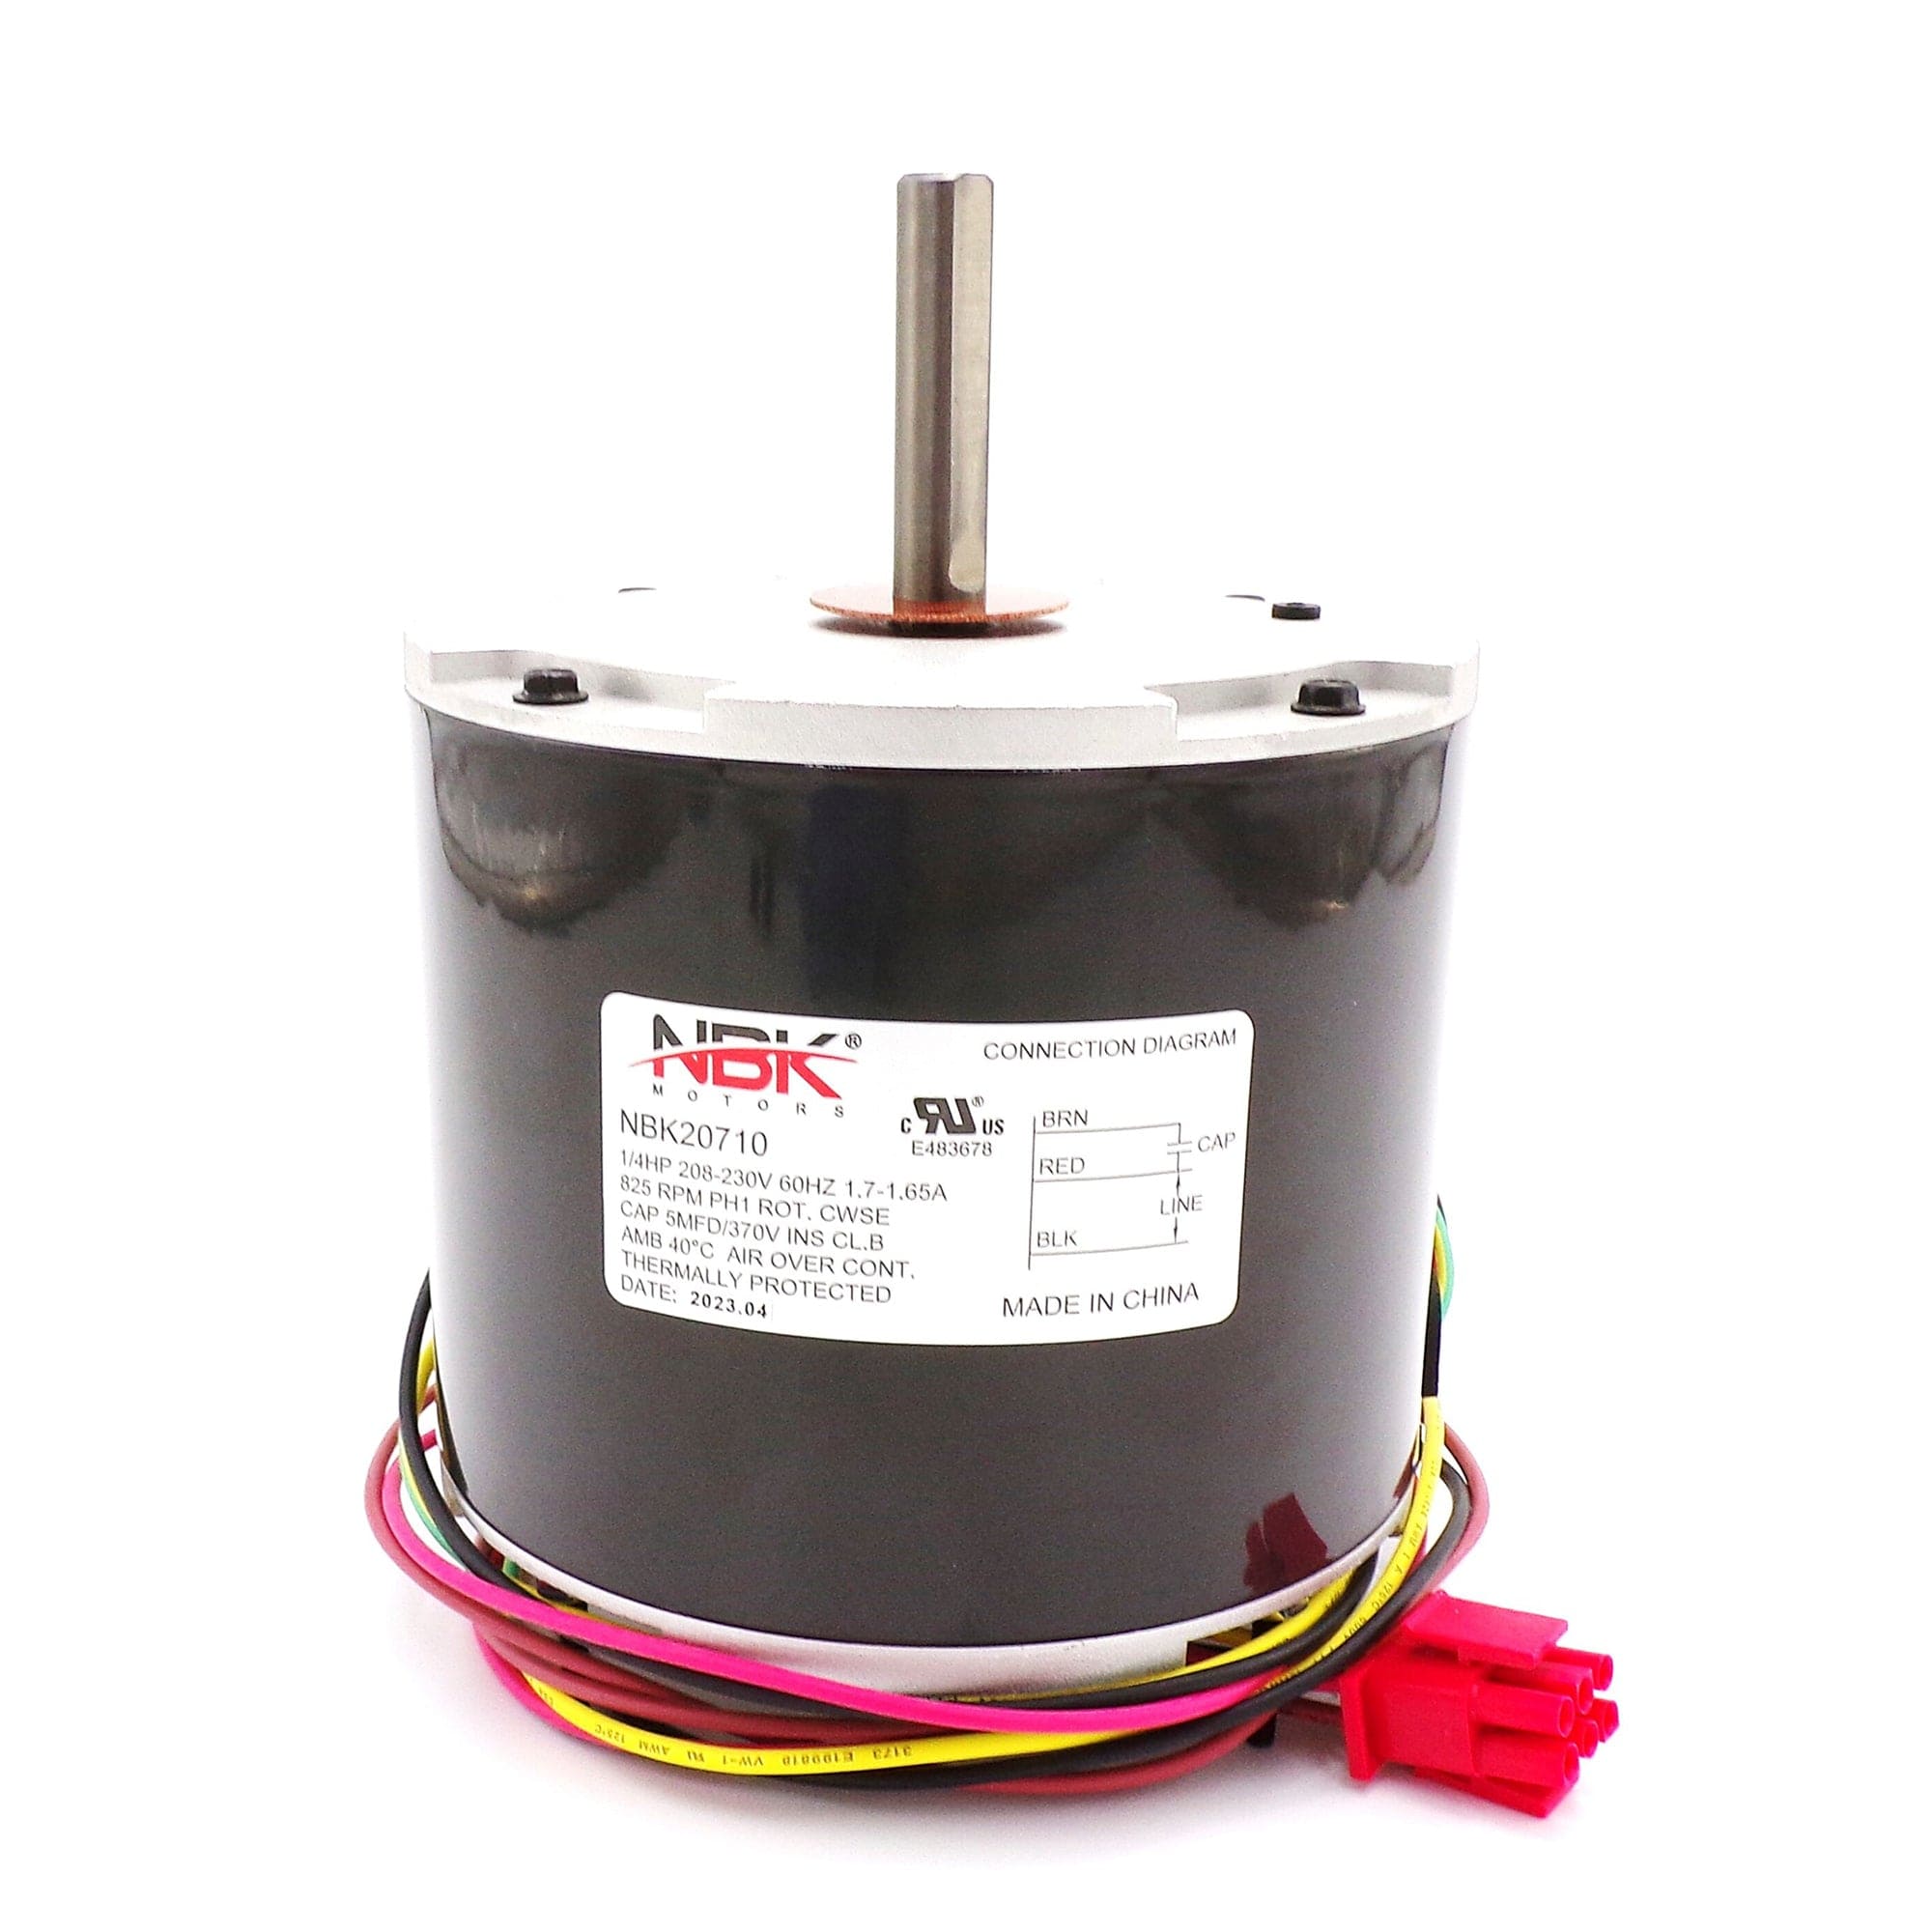 NBK 20710 Condenser Motor 208/230v 1/4 Hp, 850 Rpm Replaces AO Smith F48AA68A50